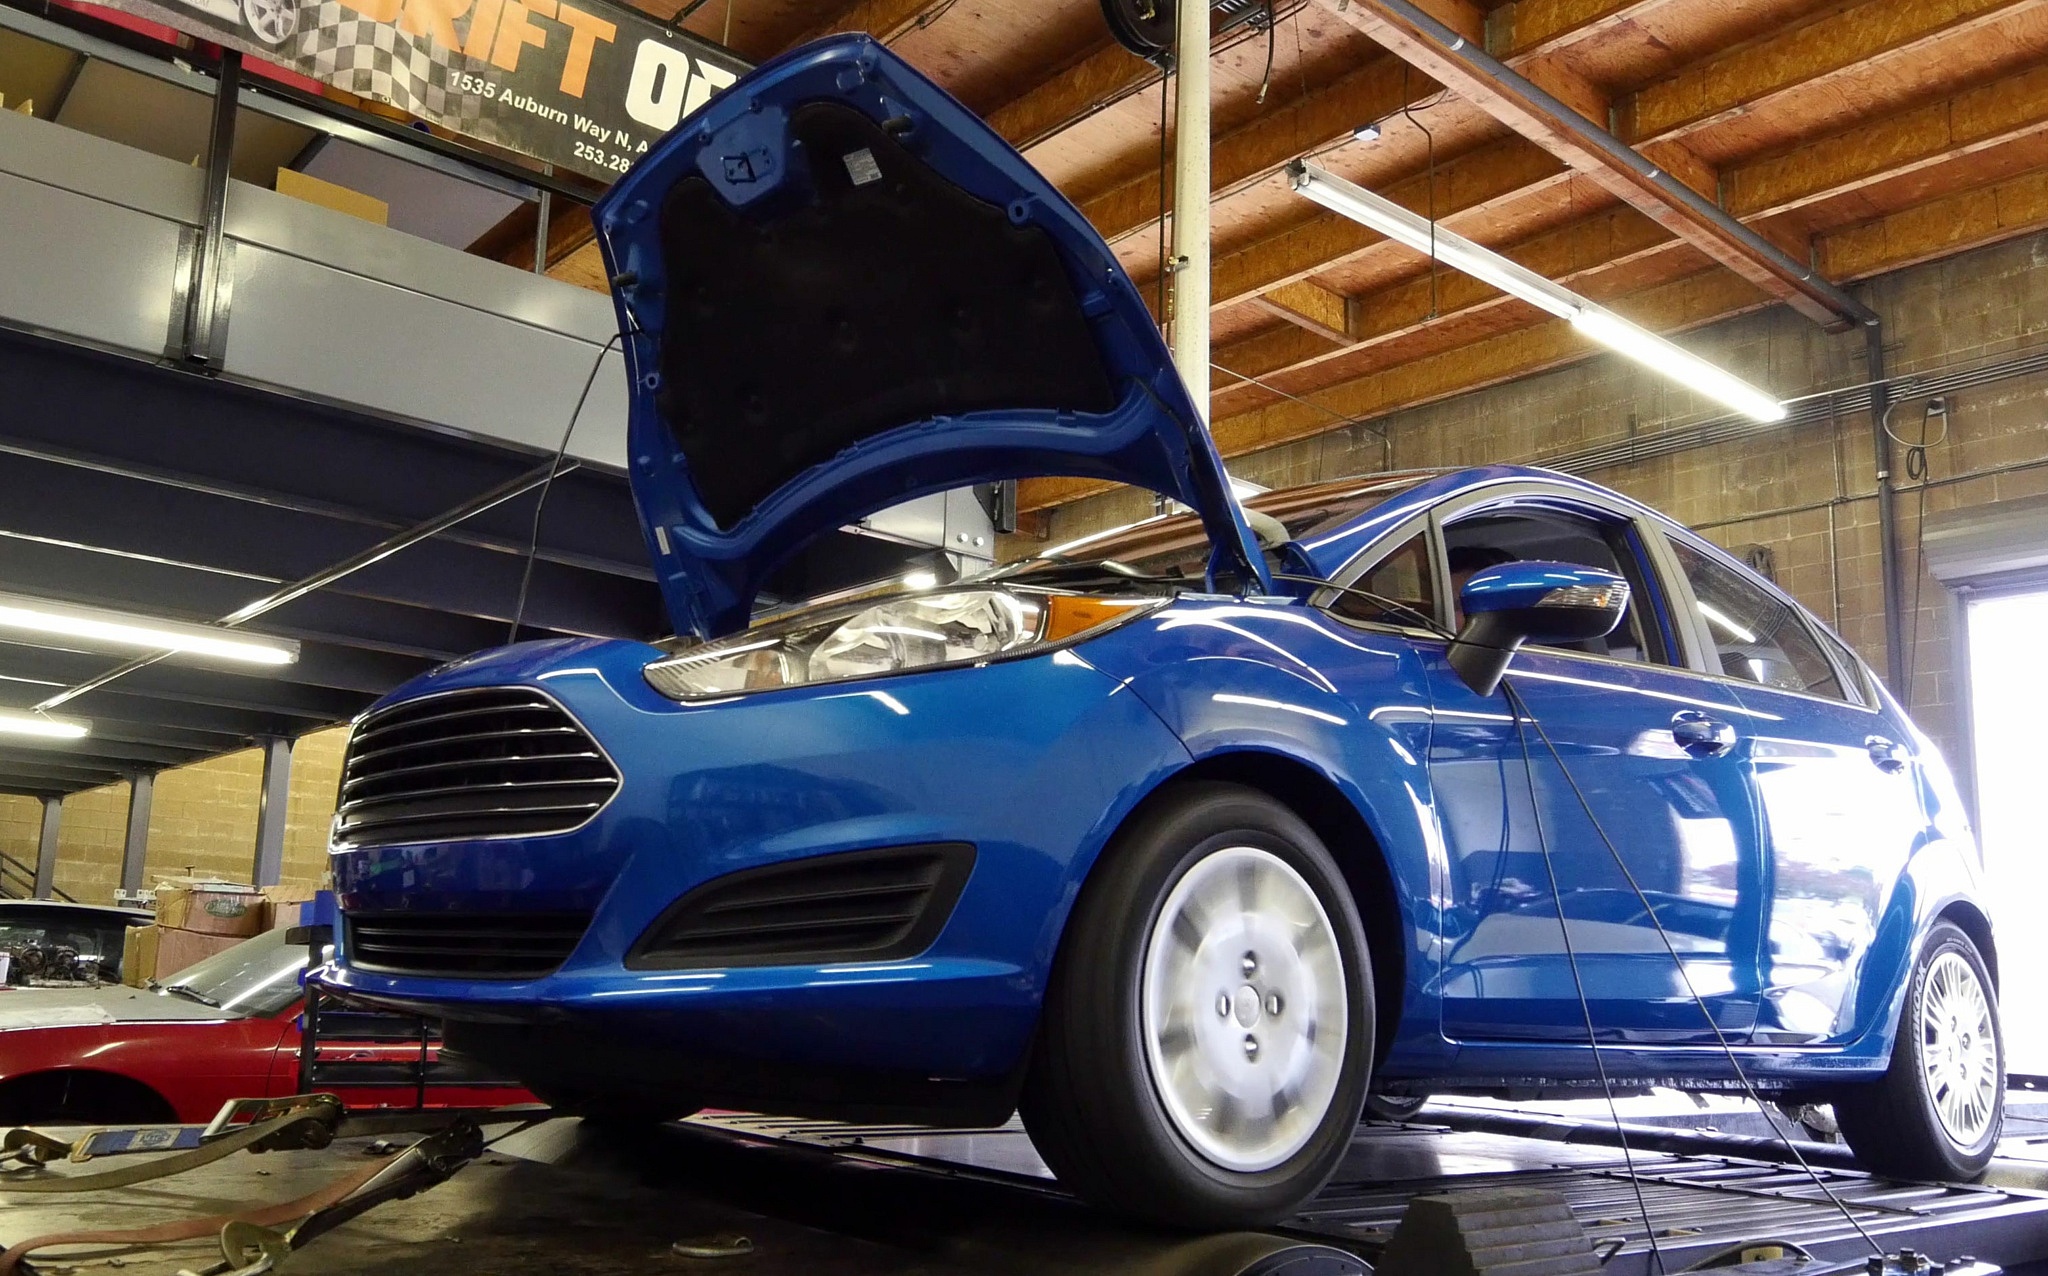 2015 Ford Fiesta SFE EcoBoost Dyno-Test Results -  Motors Blog